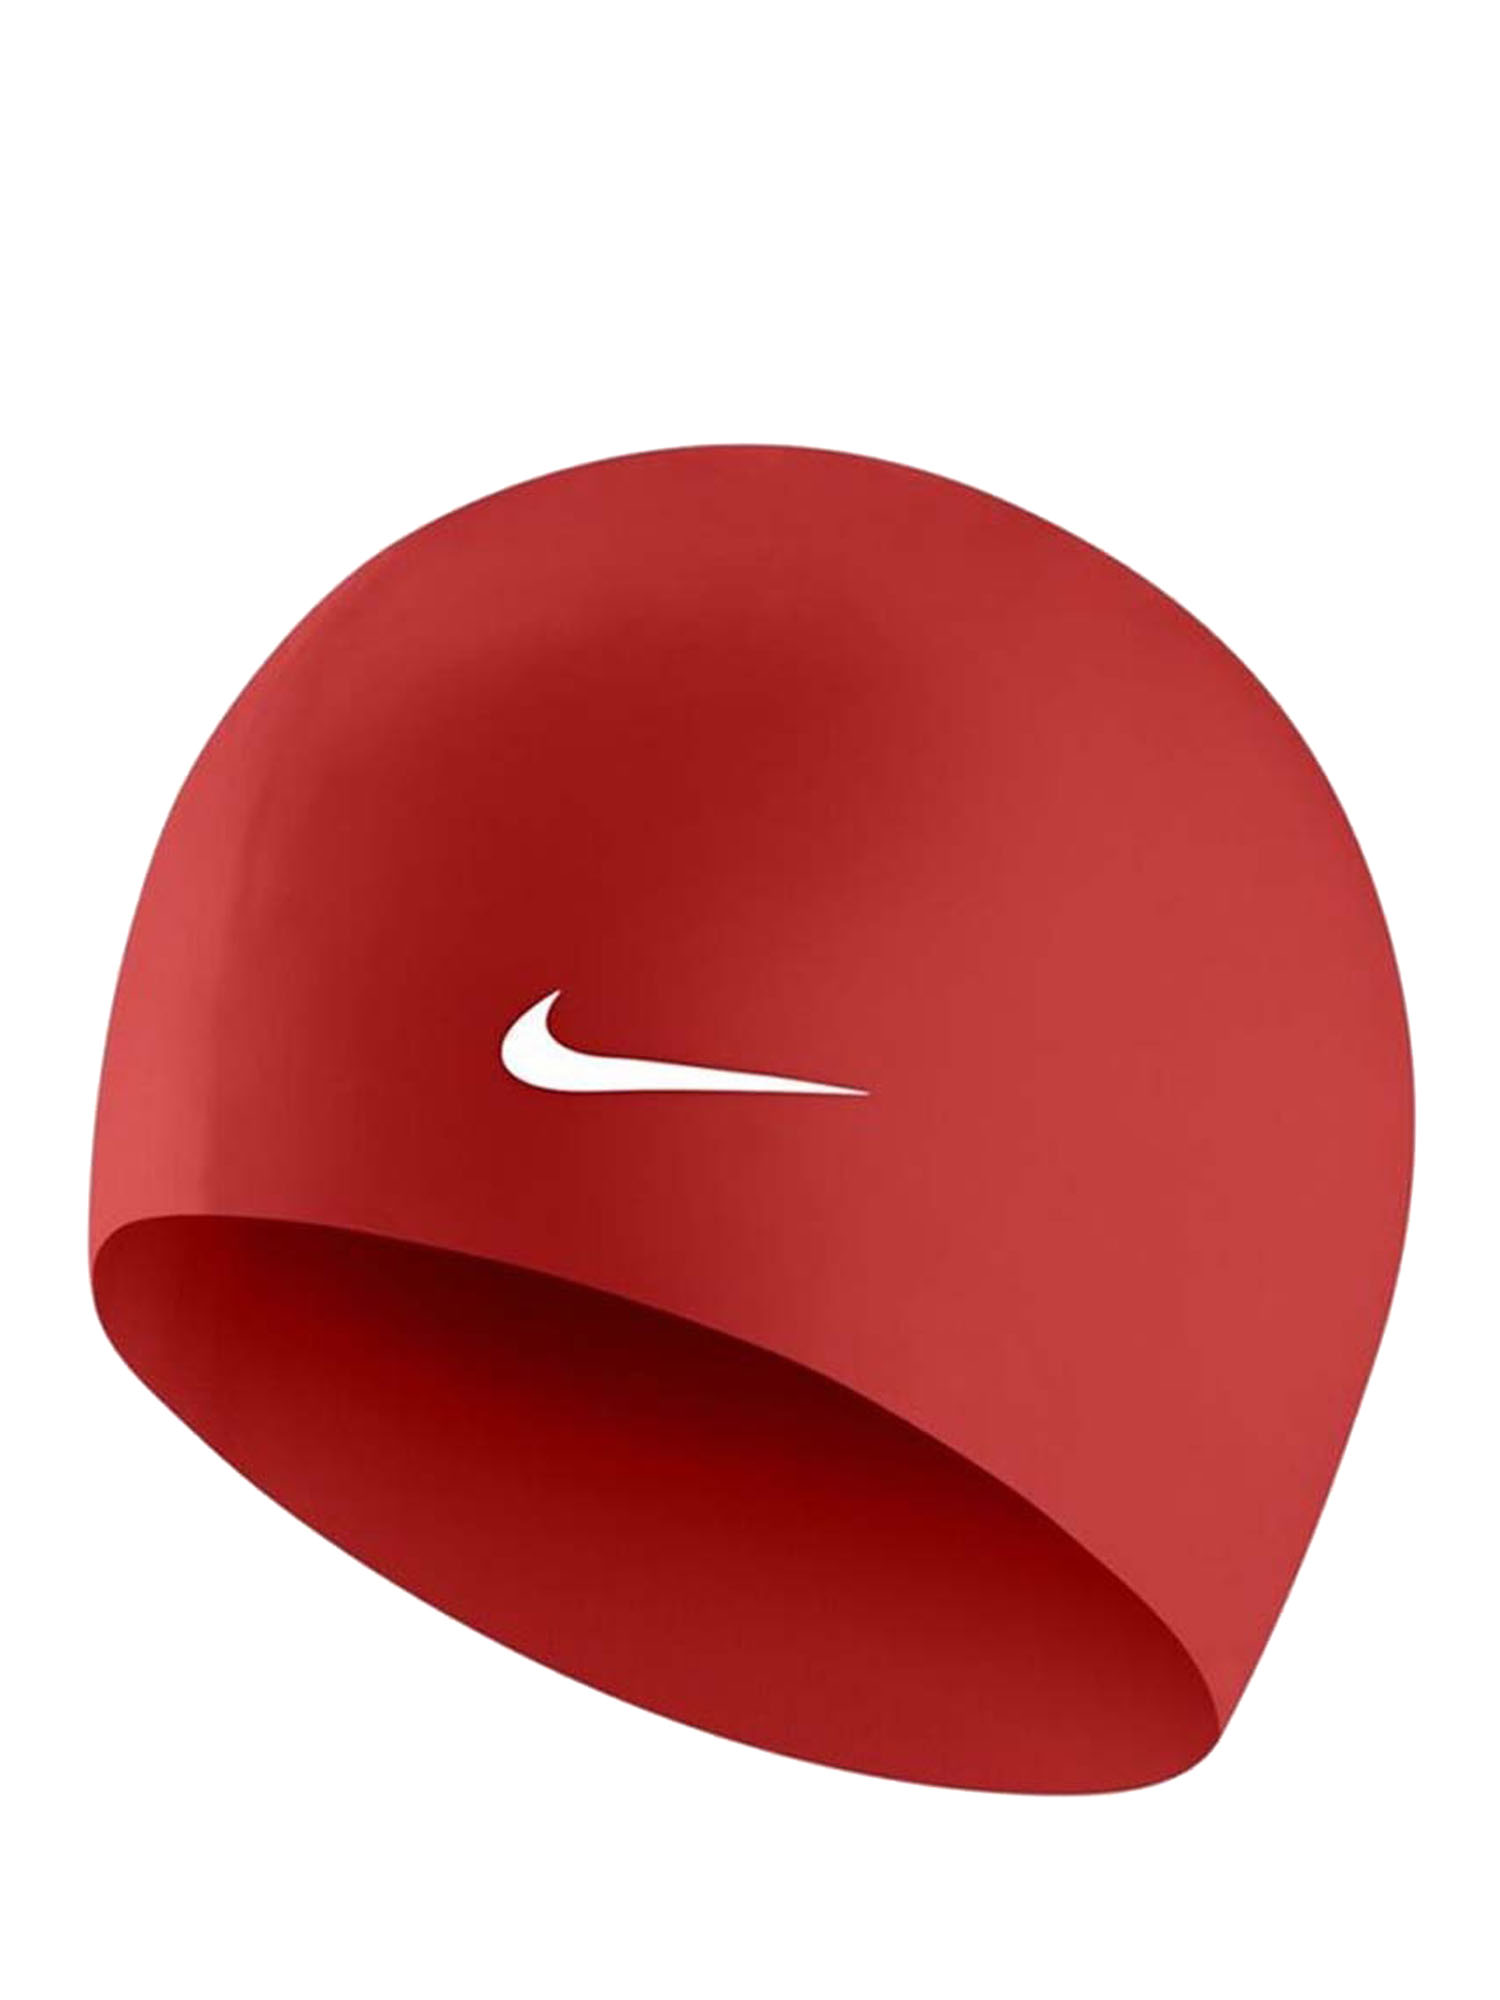 Шапочка Для Плавания Nike Solid Silicon красный